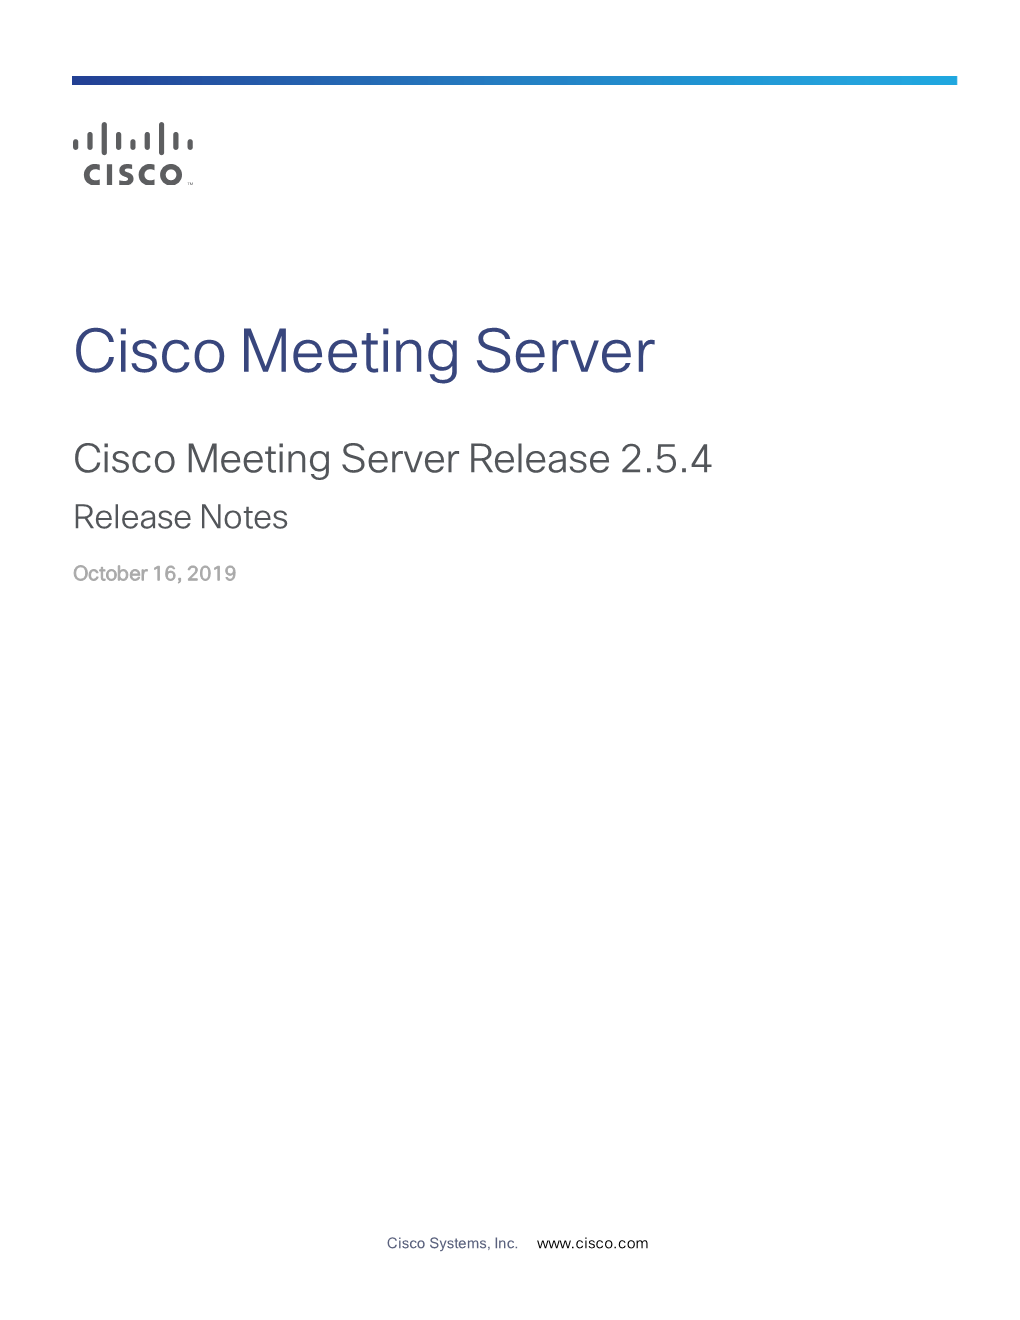 Cisco Meeting Server 2.5.4 Release Notes